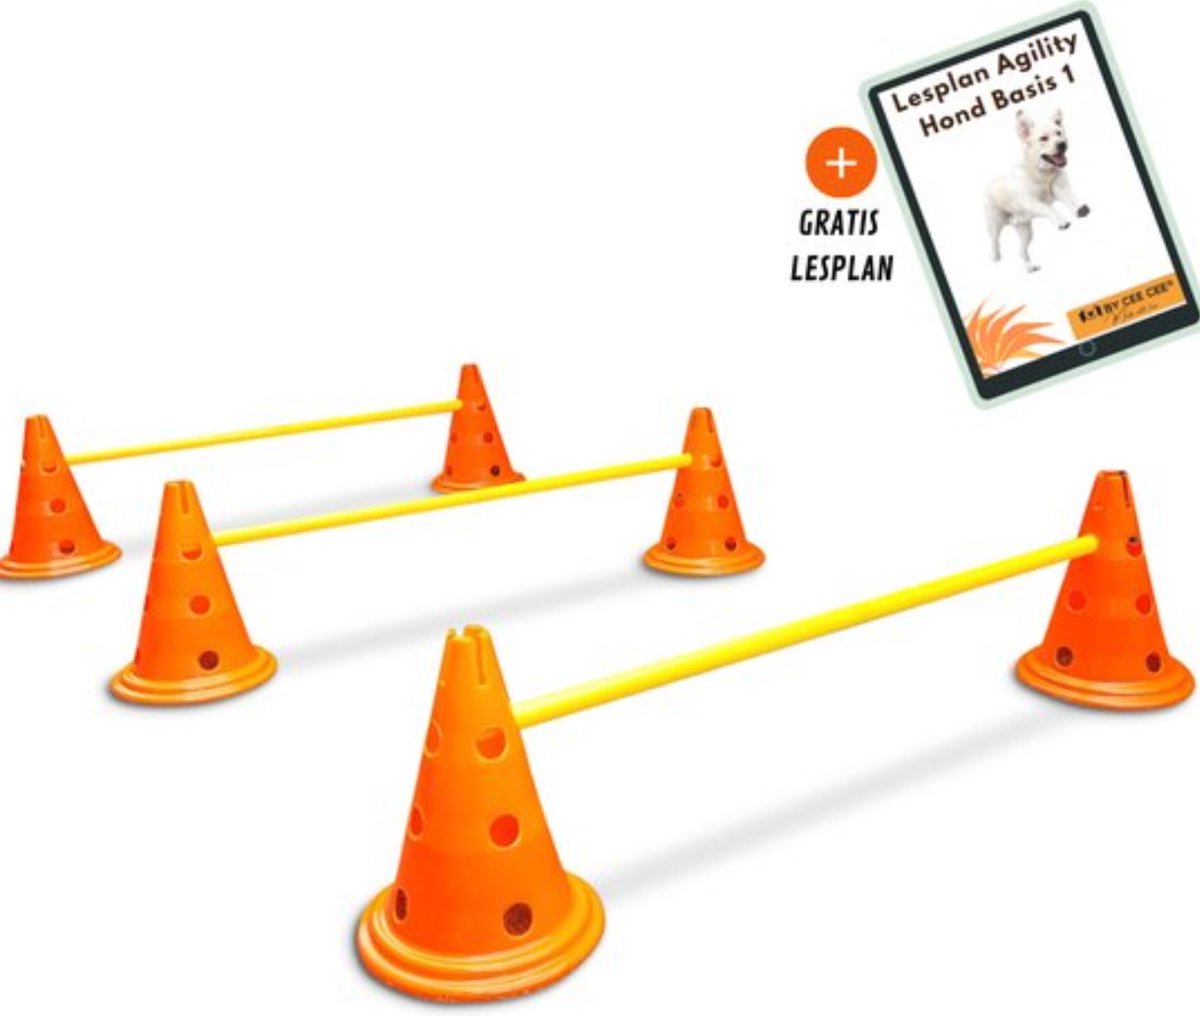 Agility Voor De Hond - 3 x Set Pylonen - Honden Training -Slalom Hond Trainen - Behendigheid Hond